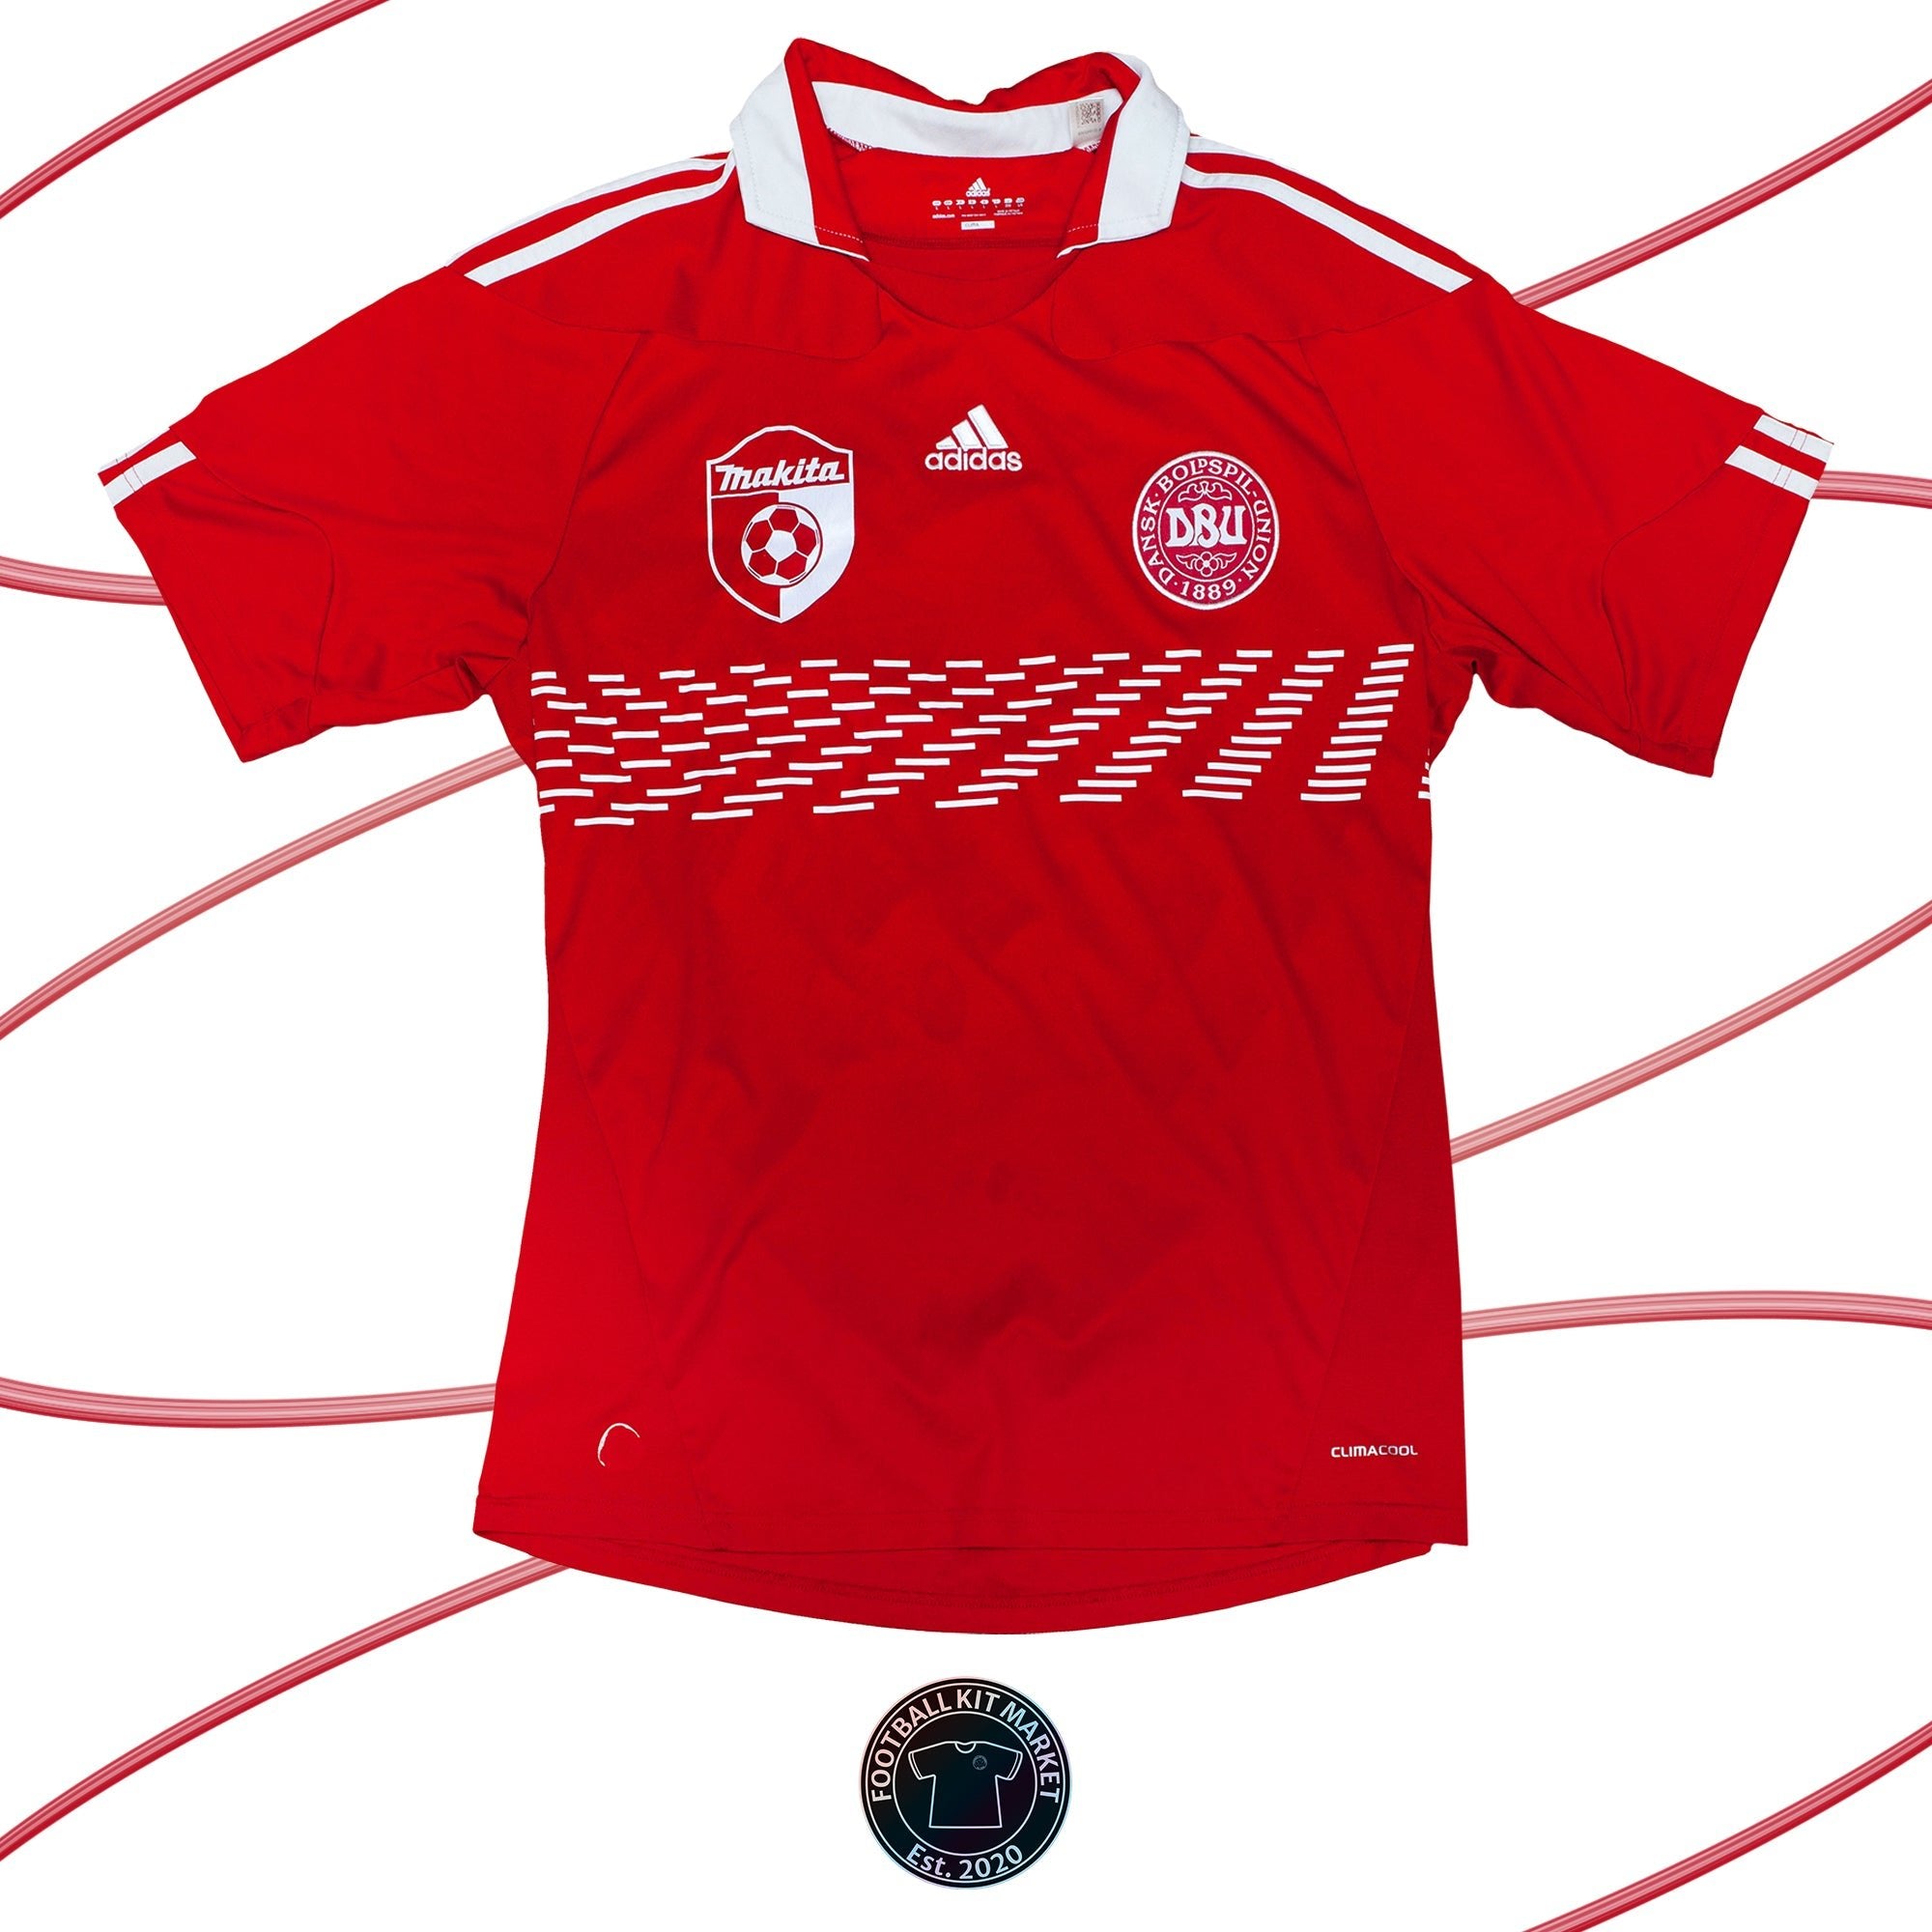 Genuine DENMARK Fan Shirt (2010-2012) - ADIDAS (L) - Product Image from Football Kit Market